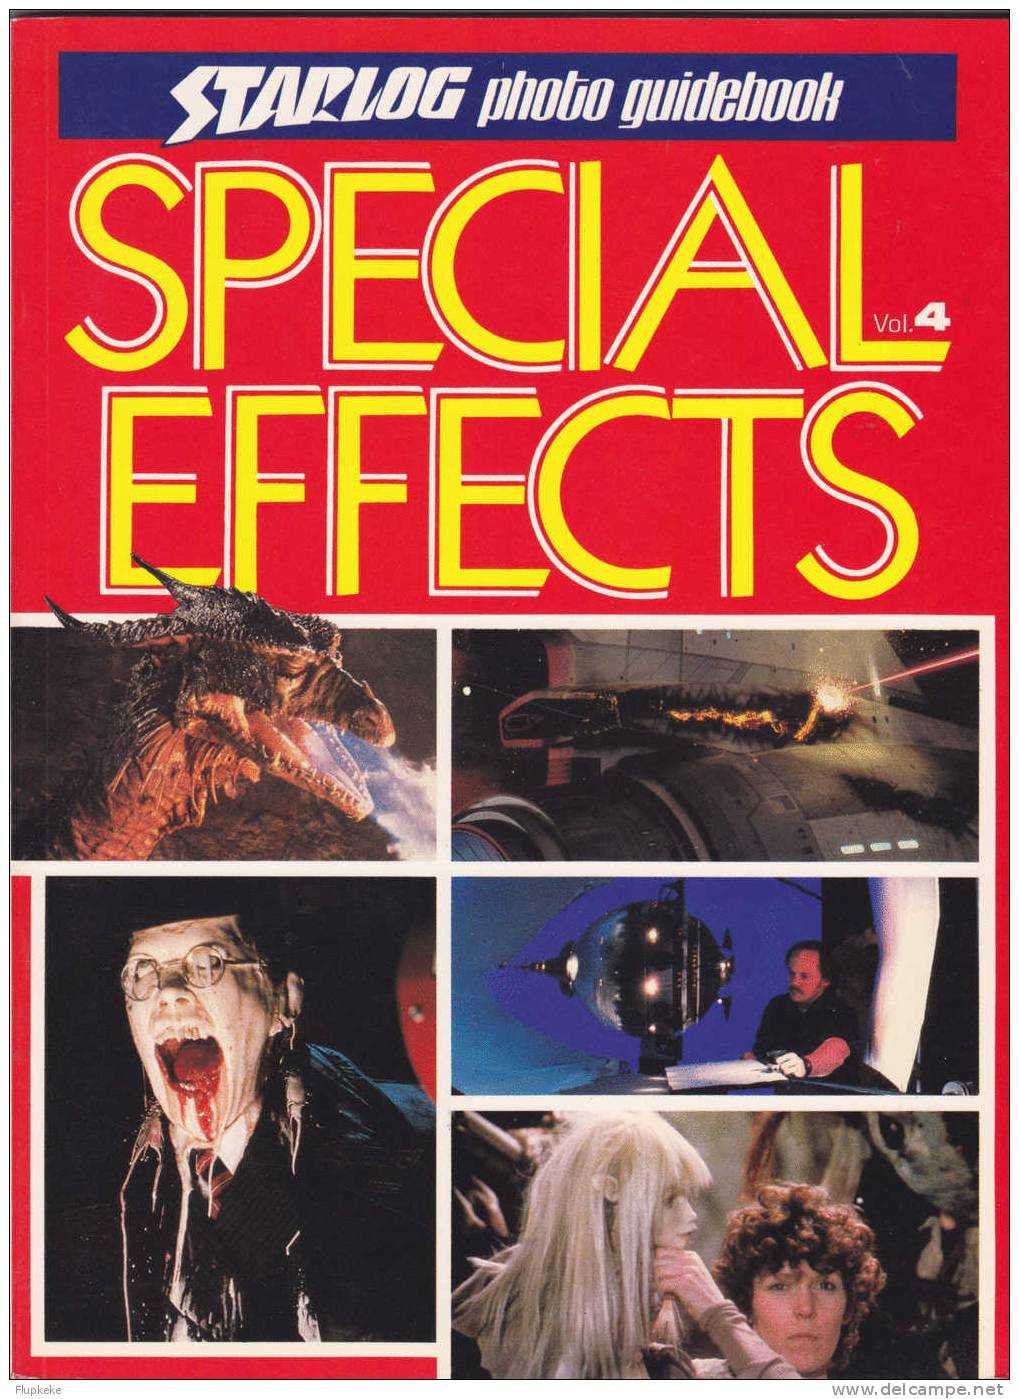 Starlog Photo Guidebook Special Effect Volume 4 David Hutchison Starlog Press - Entertainment